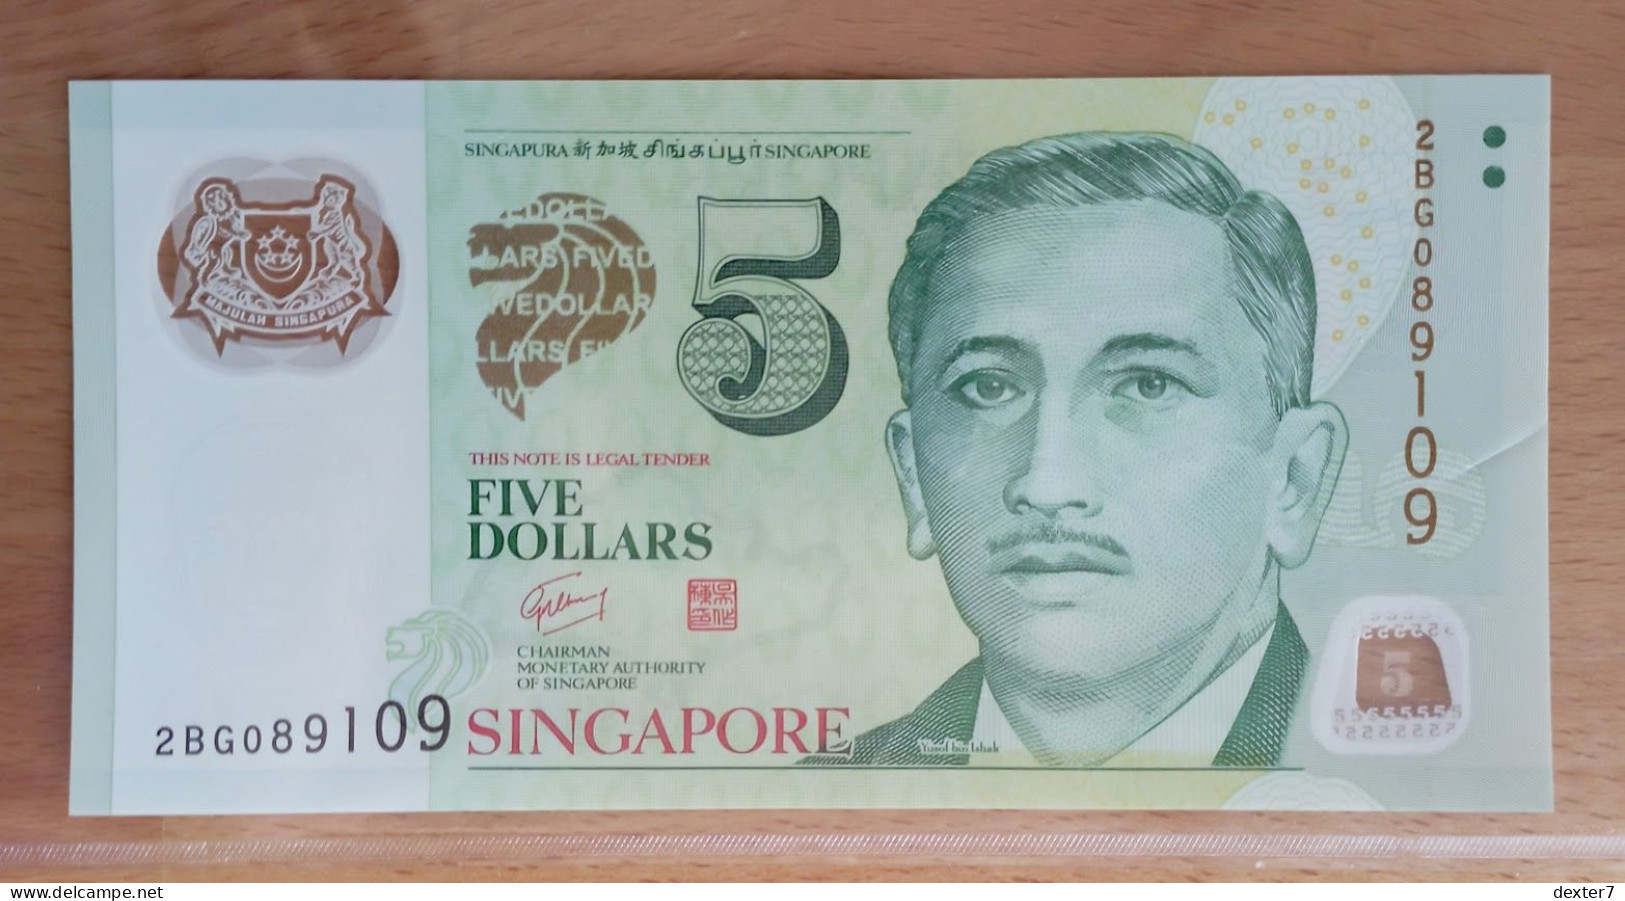 Singapore 5 Dollars 2007 UNC Polymer - Singapore